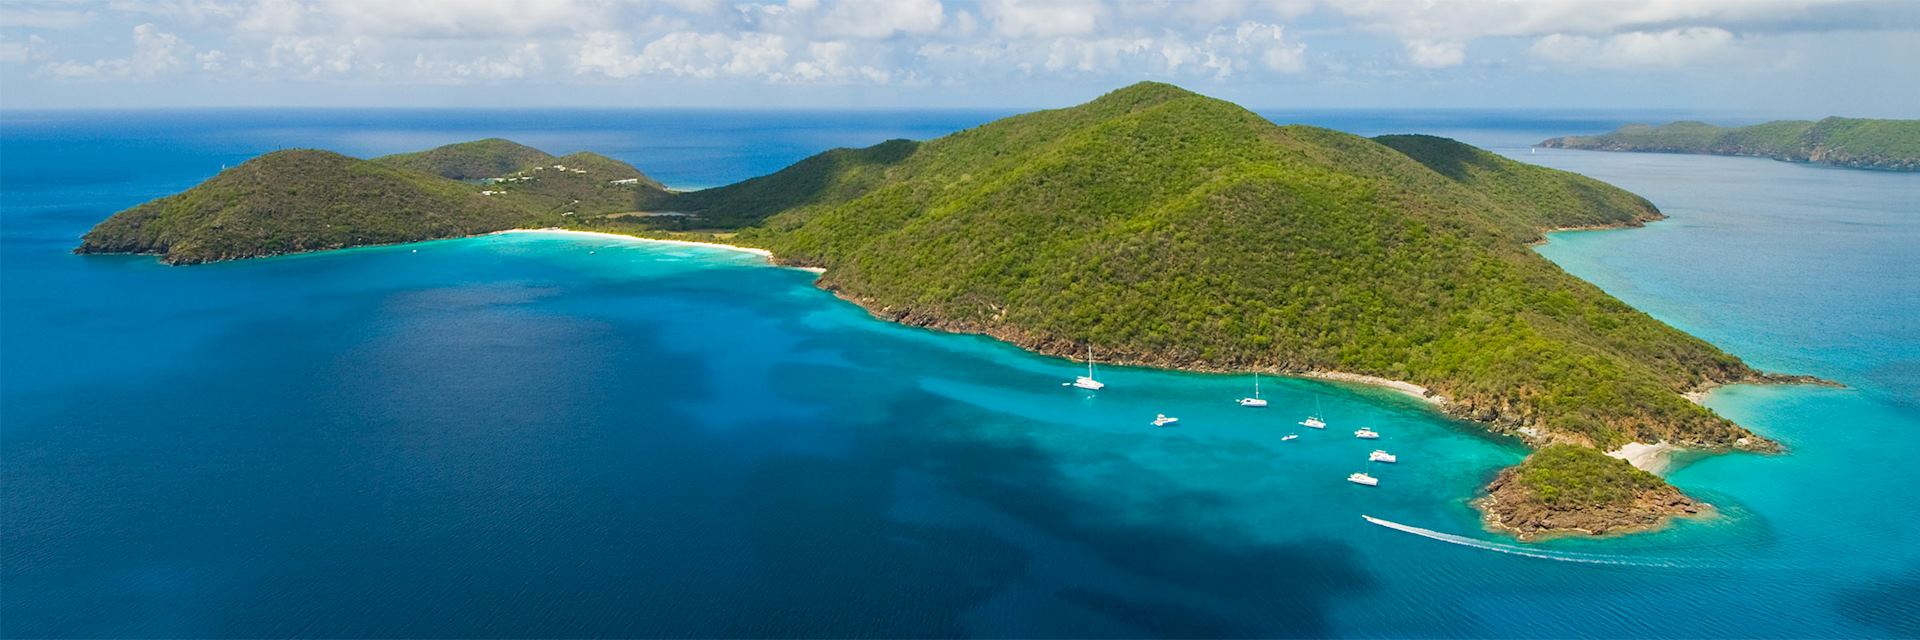 Guana Island from the air, British Virgin Islands